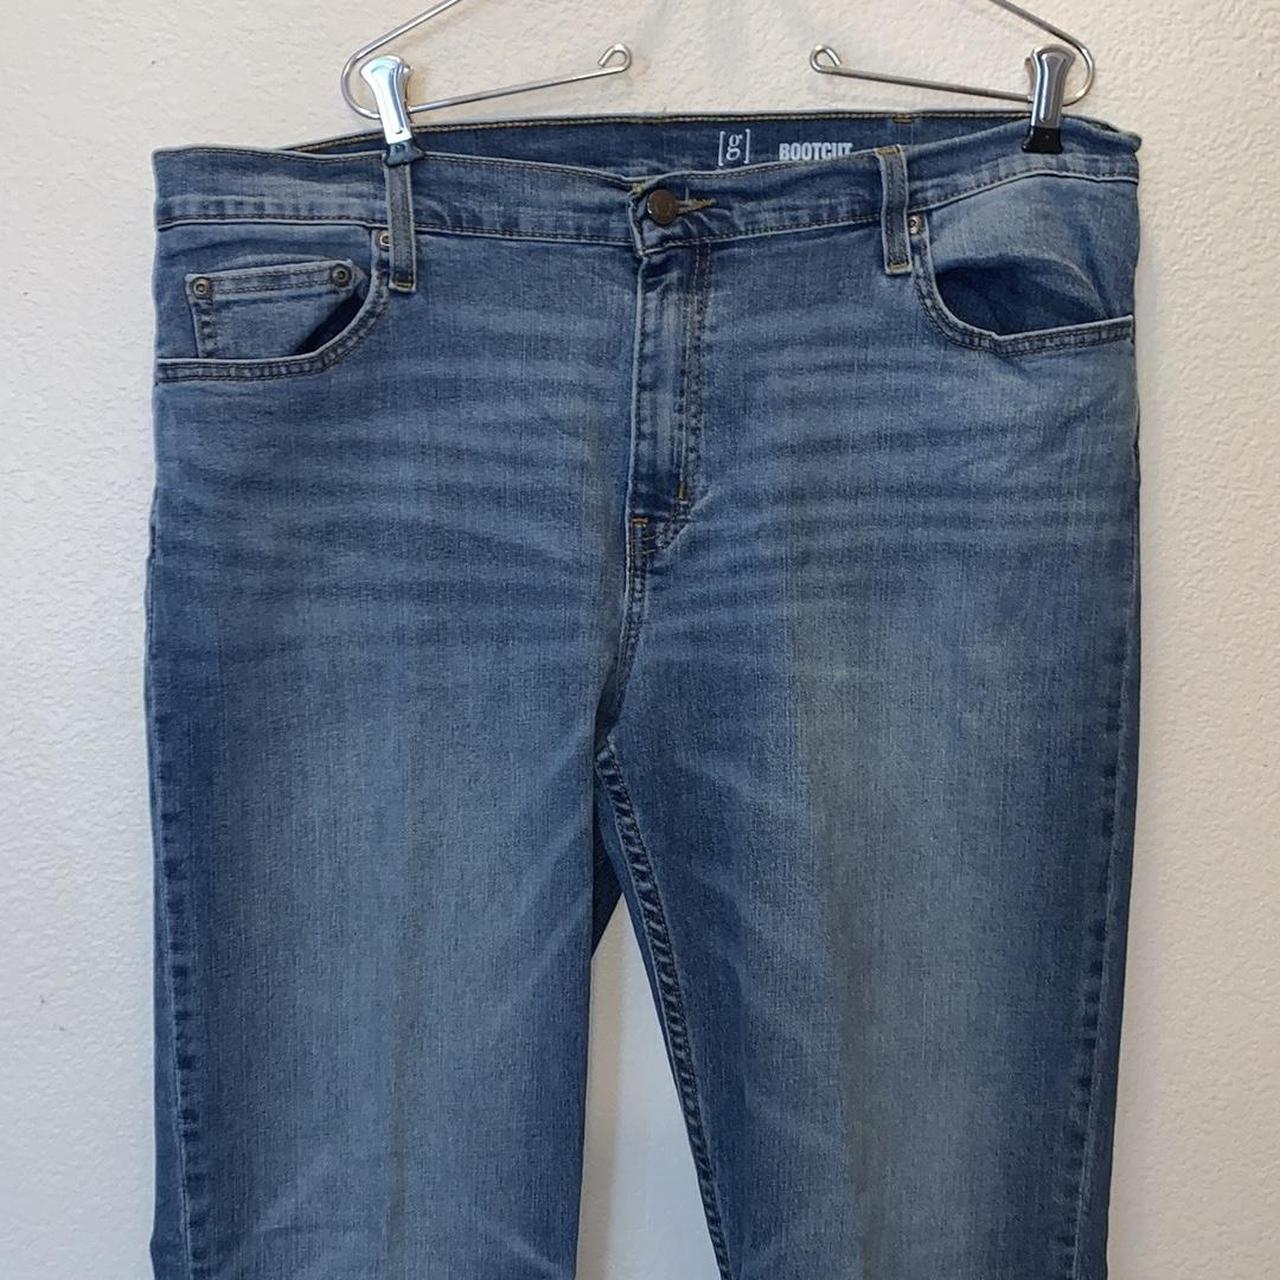 George Men's Bootcut Jeans